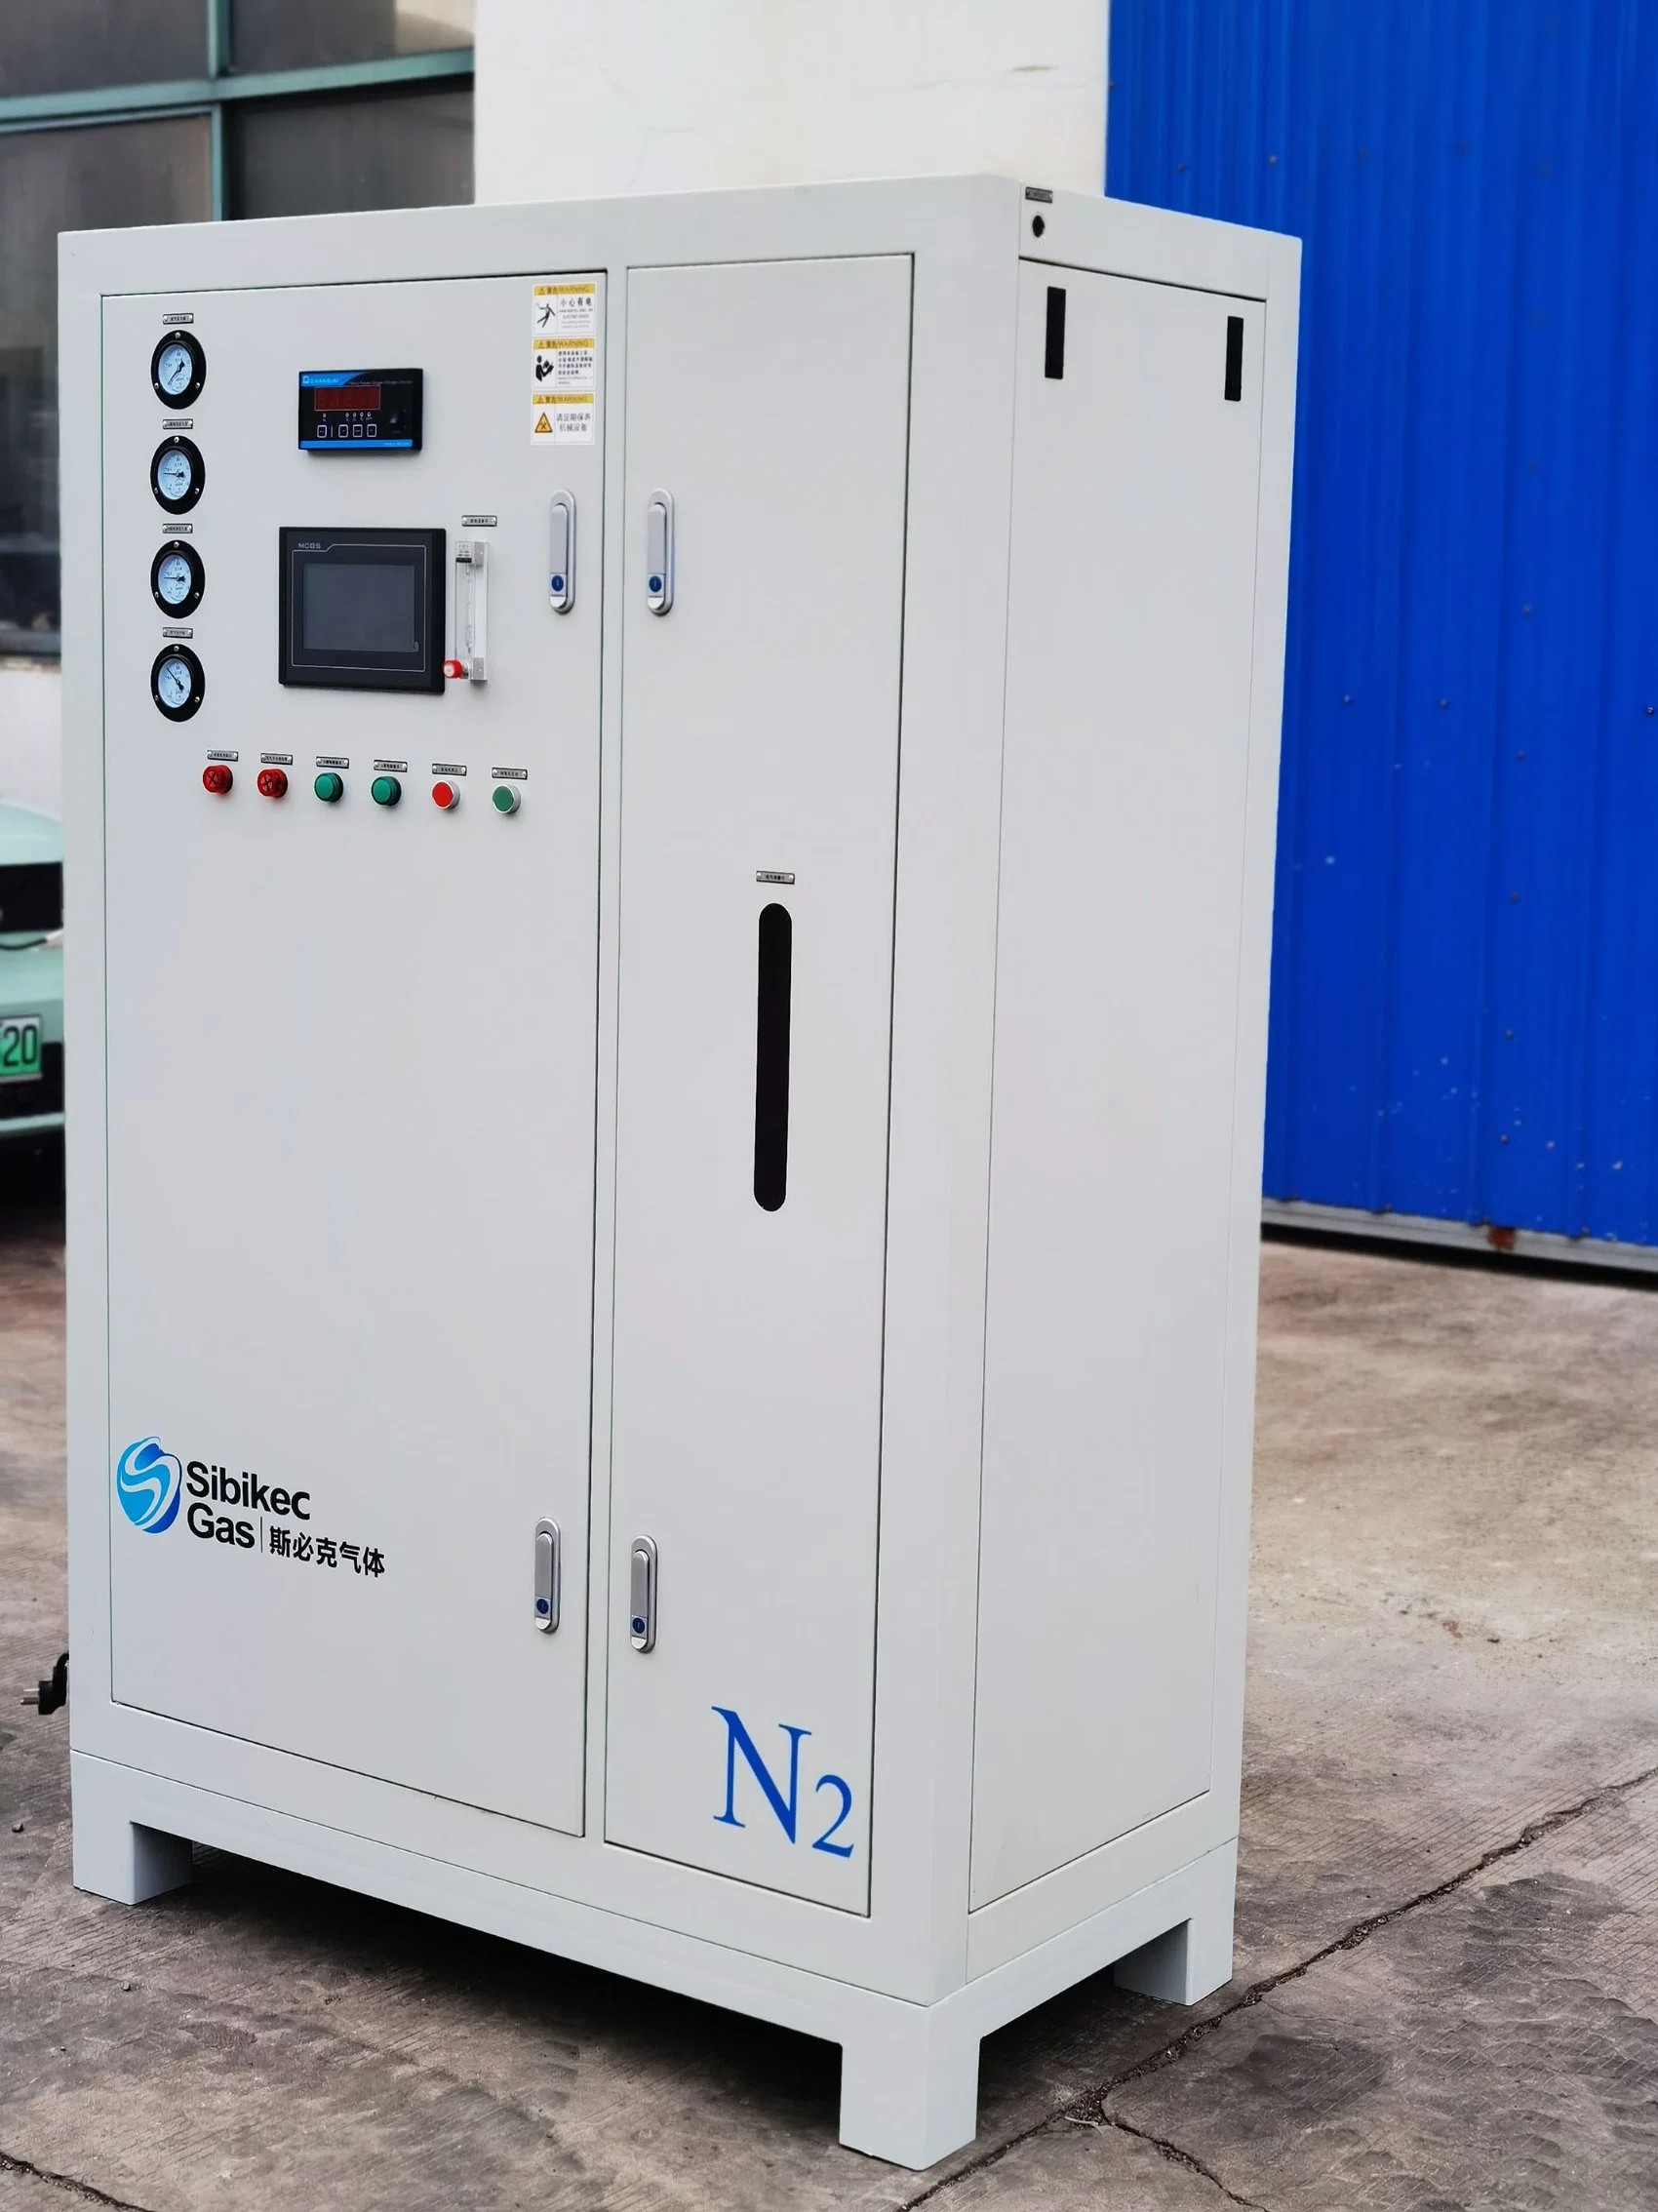 Nitrogen Gas in Food Process Nitrogen Gas Generators Containers